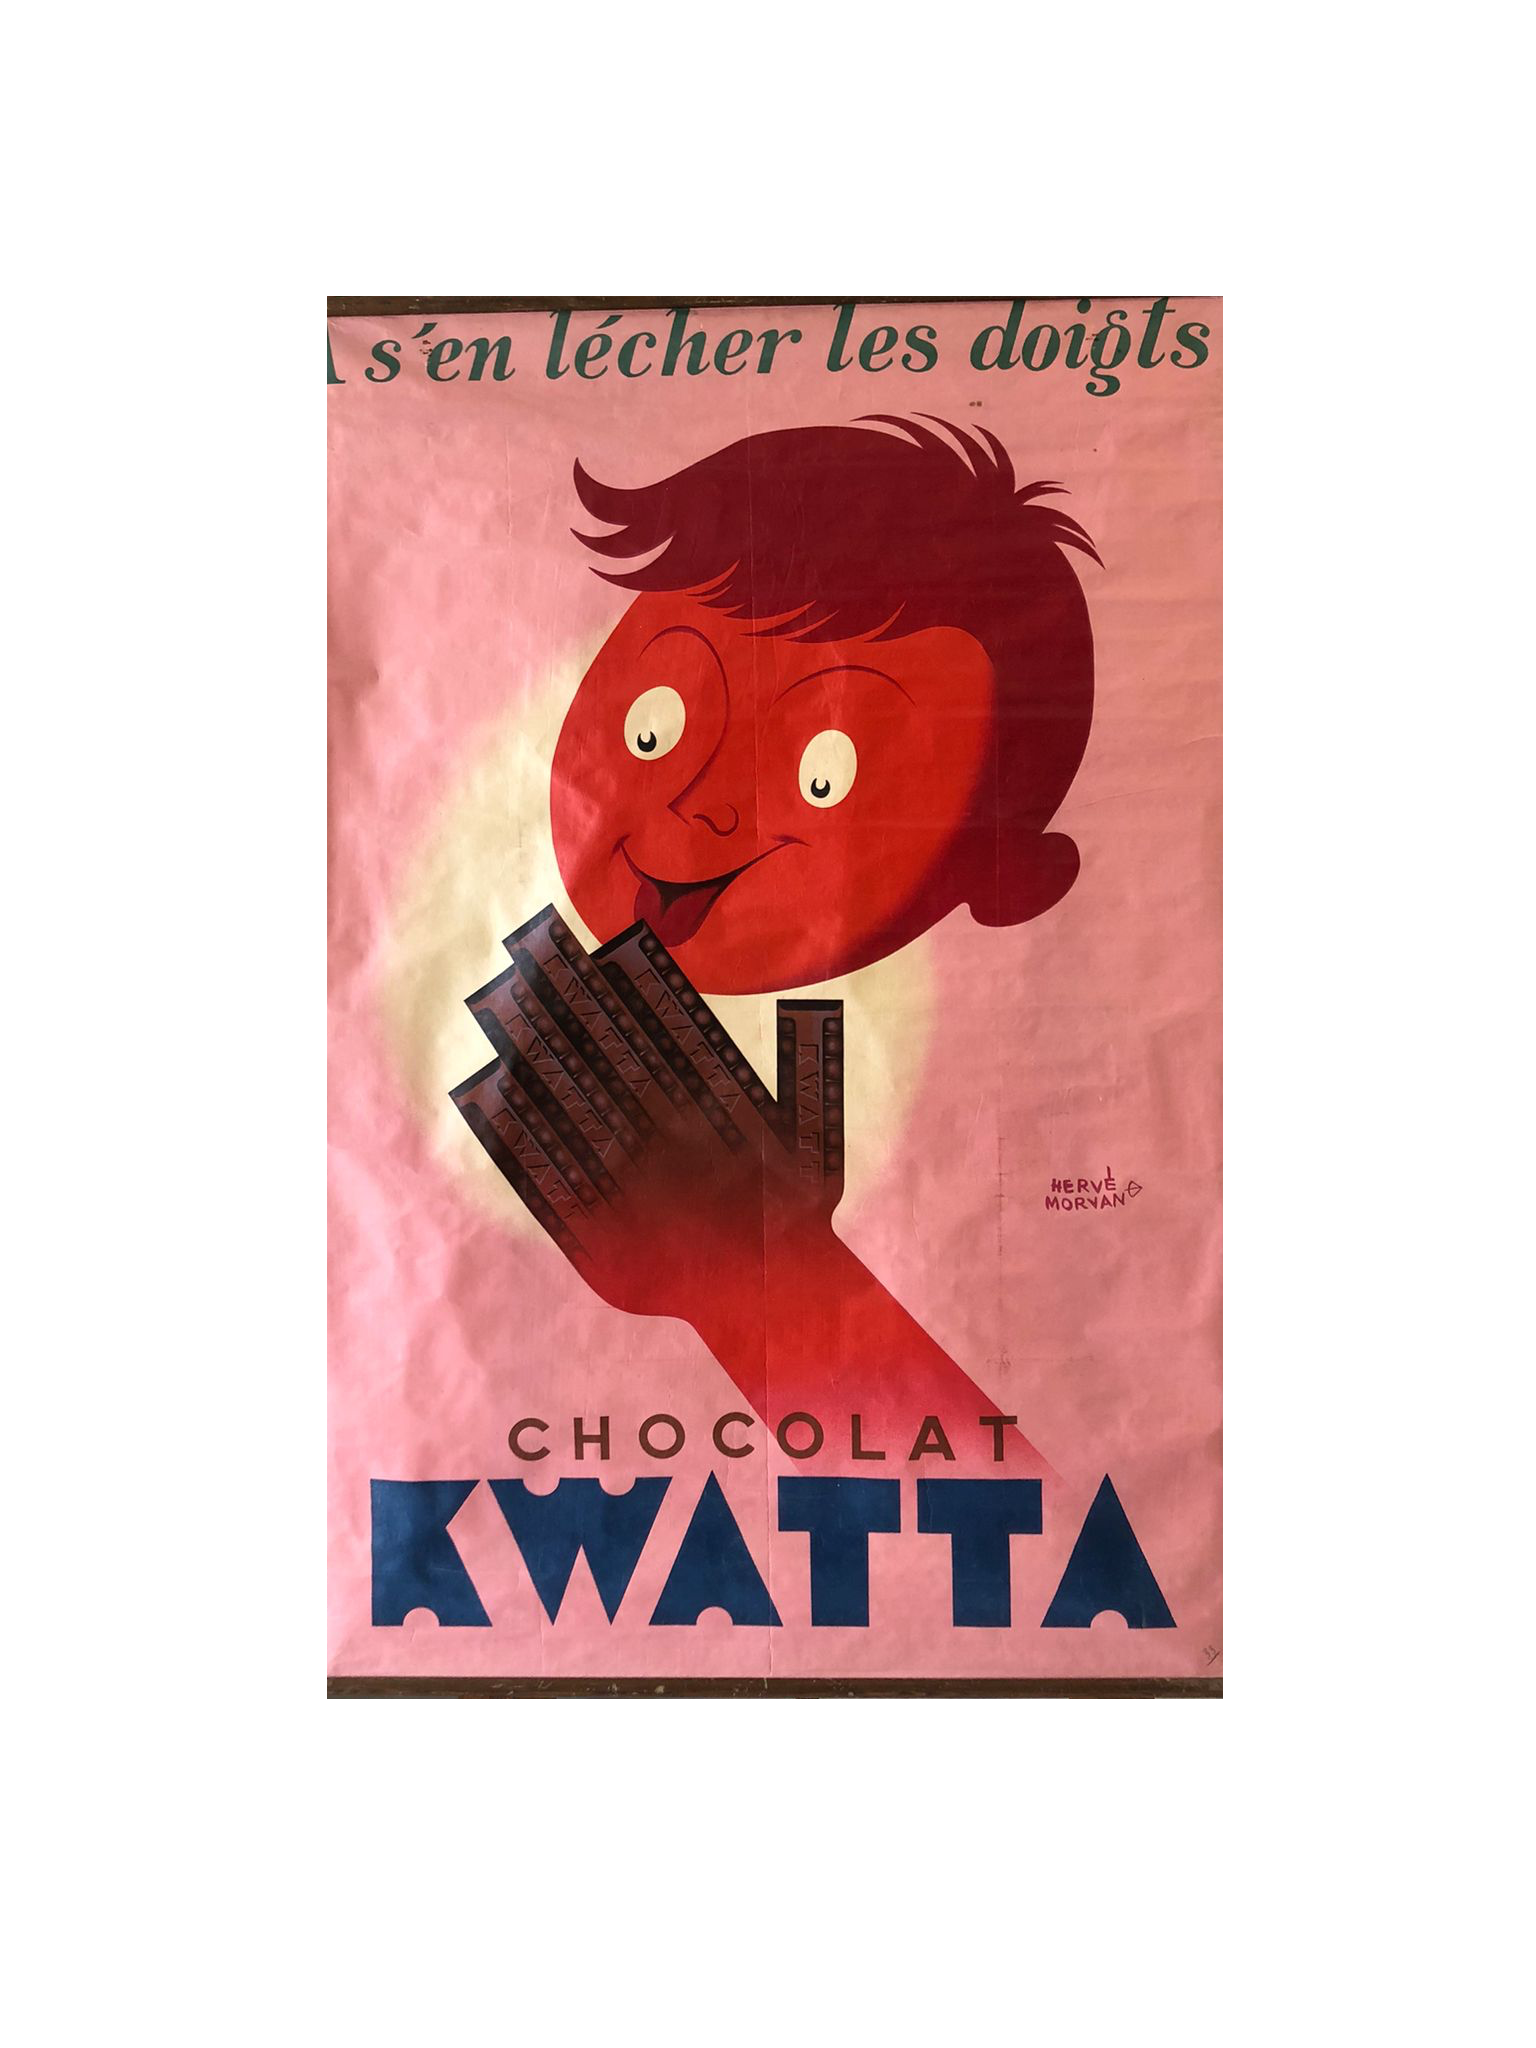 Chocolat Kwatta by Herve Morvan